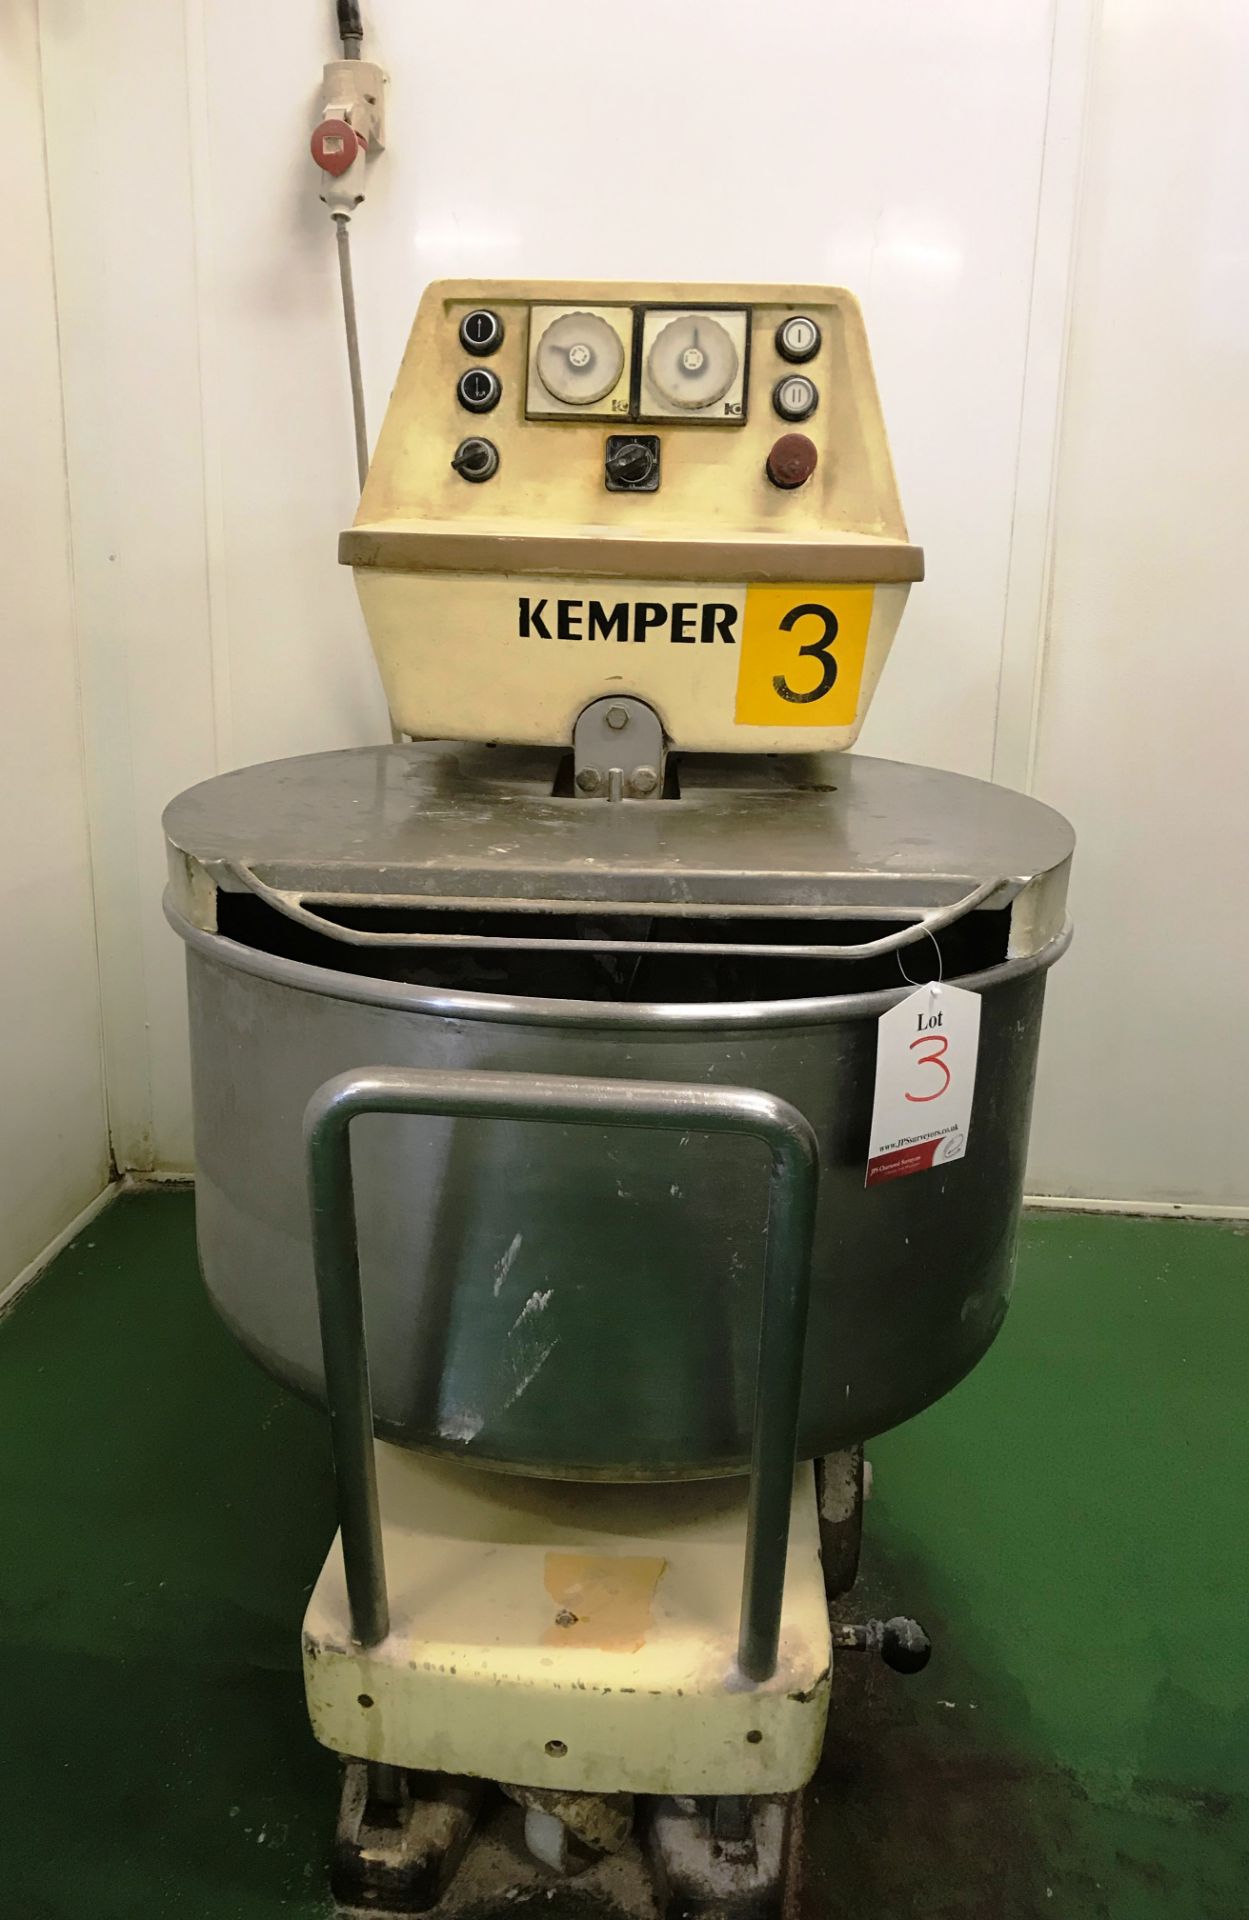 Kemper 3 Spiral Mixer w/ Removable Bowl | Advised 64kg & YOM: 2003